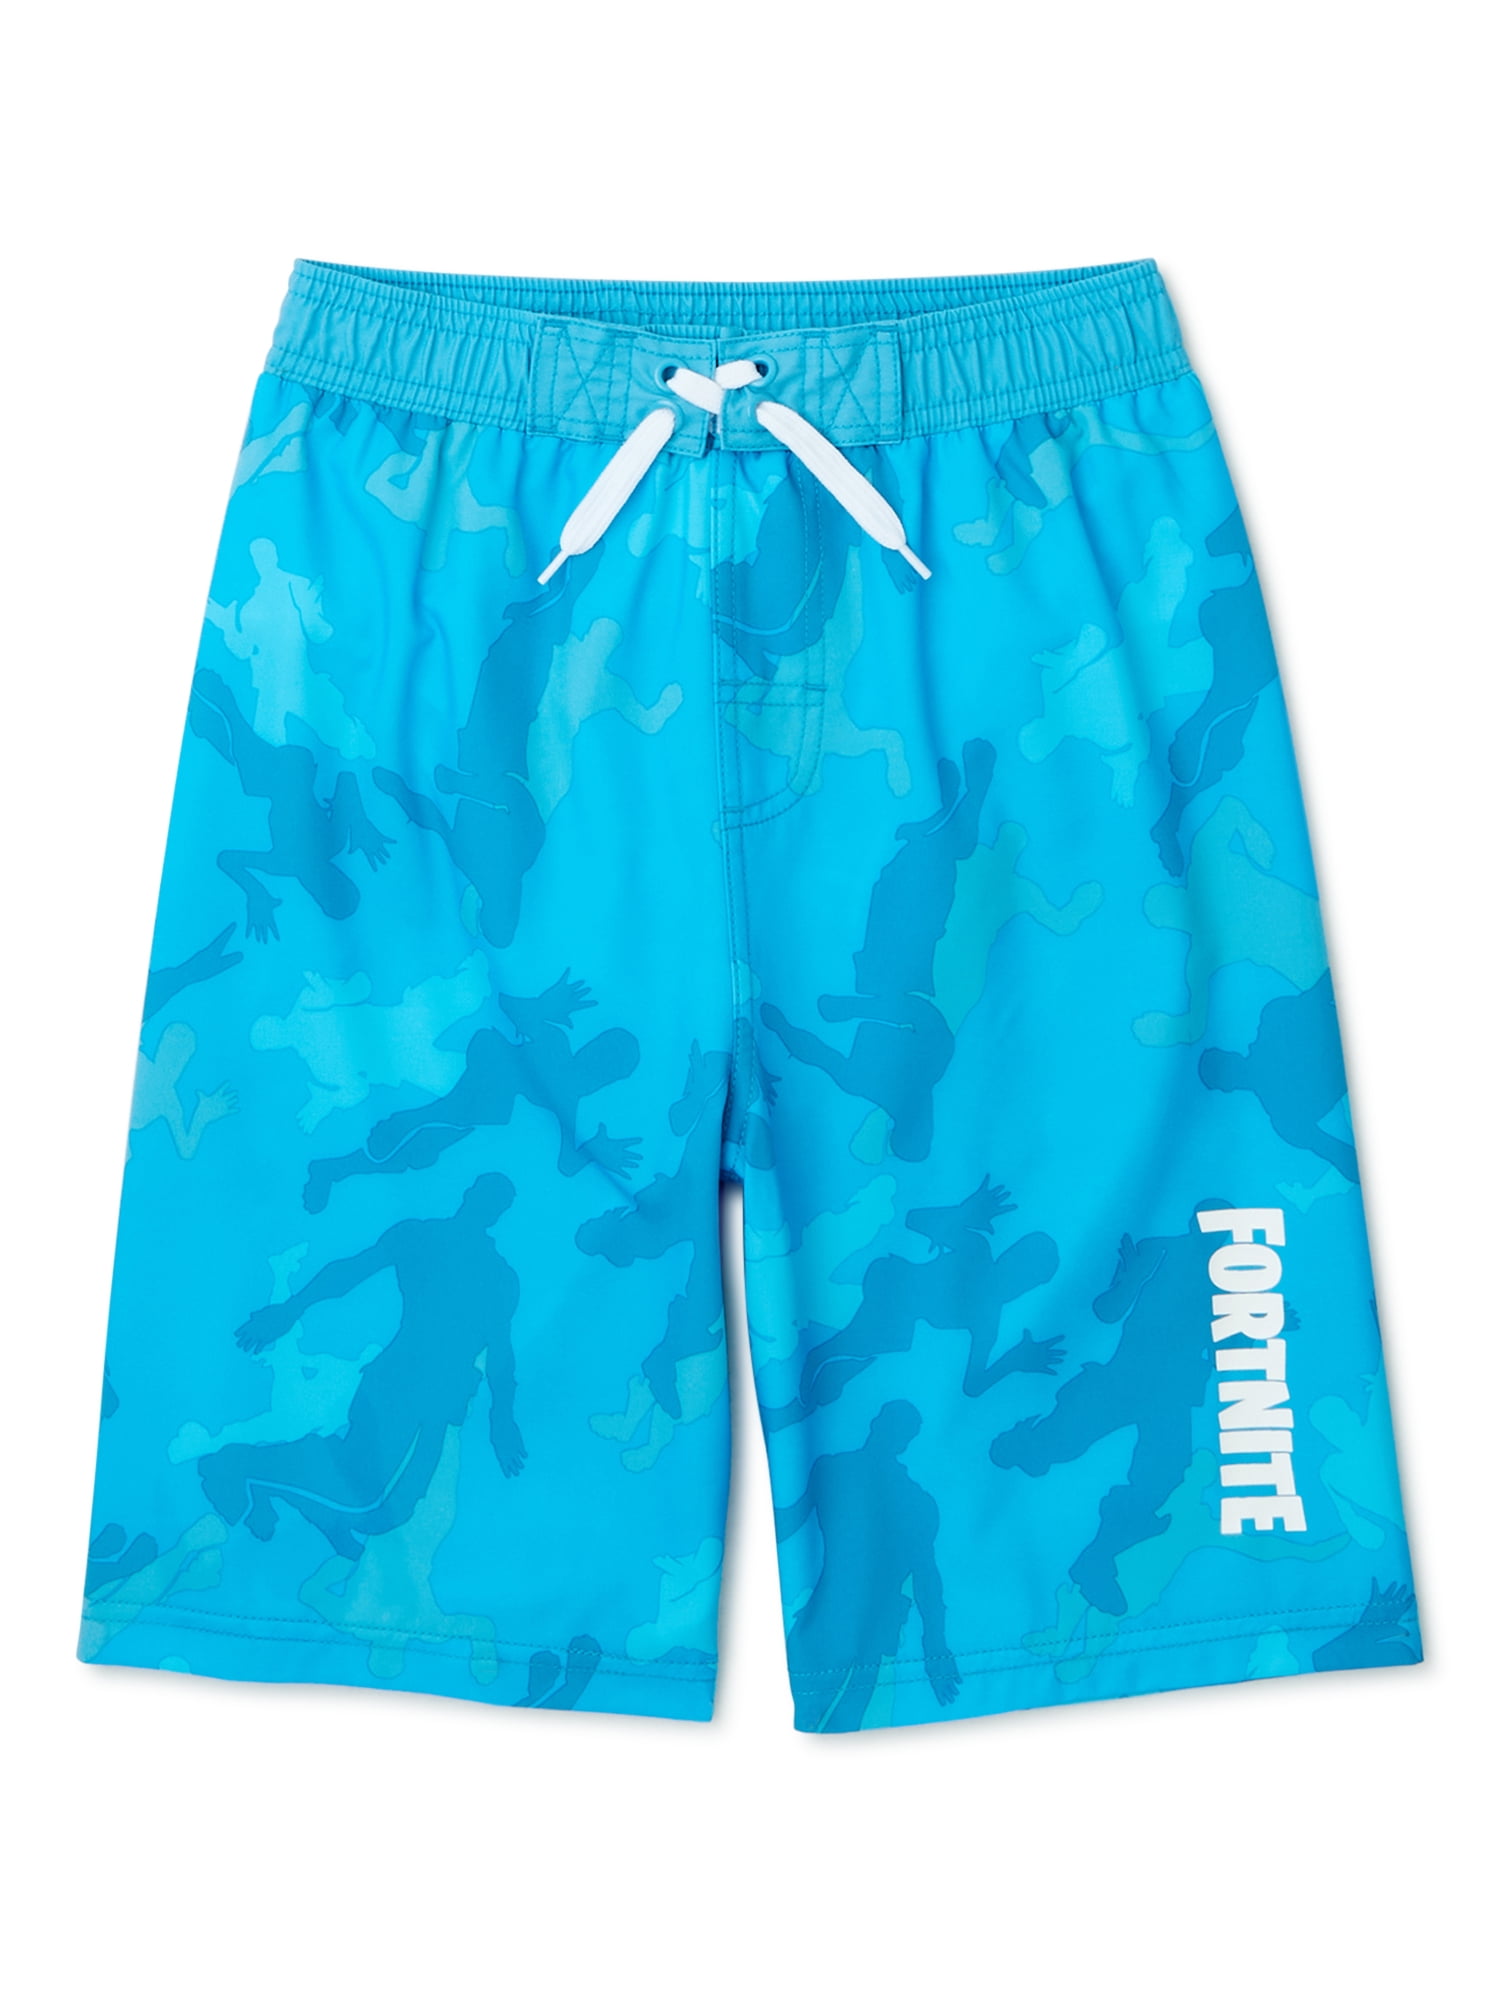 Fortnite Boys Officially Licensed Swimwear-Swim Trunks-Rash Guard Separates 